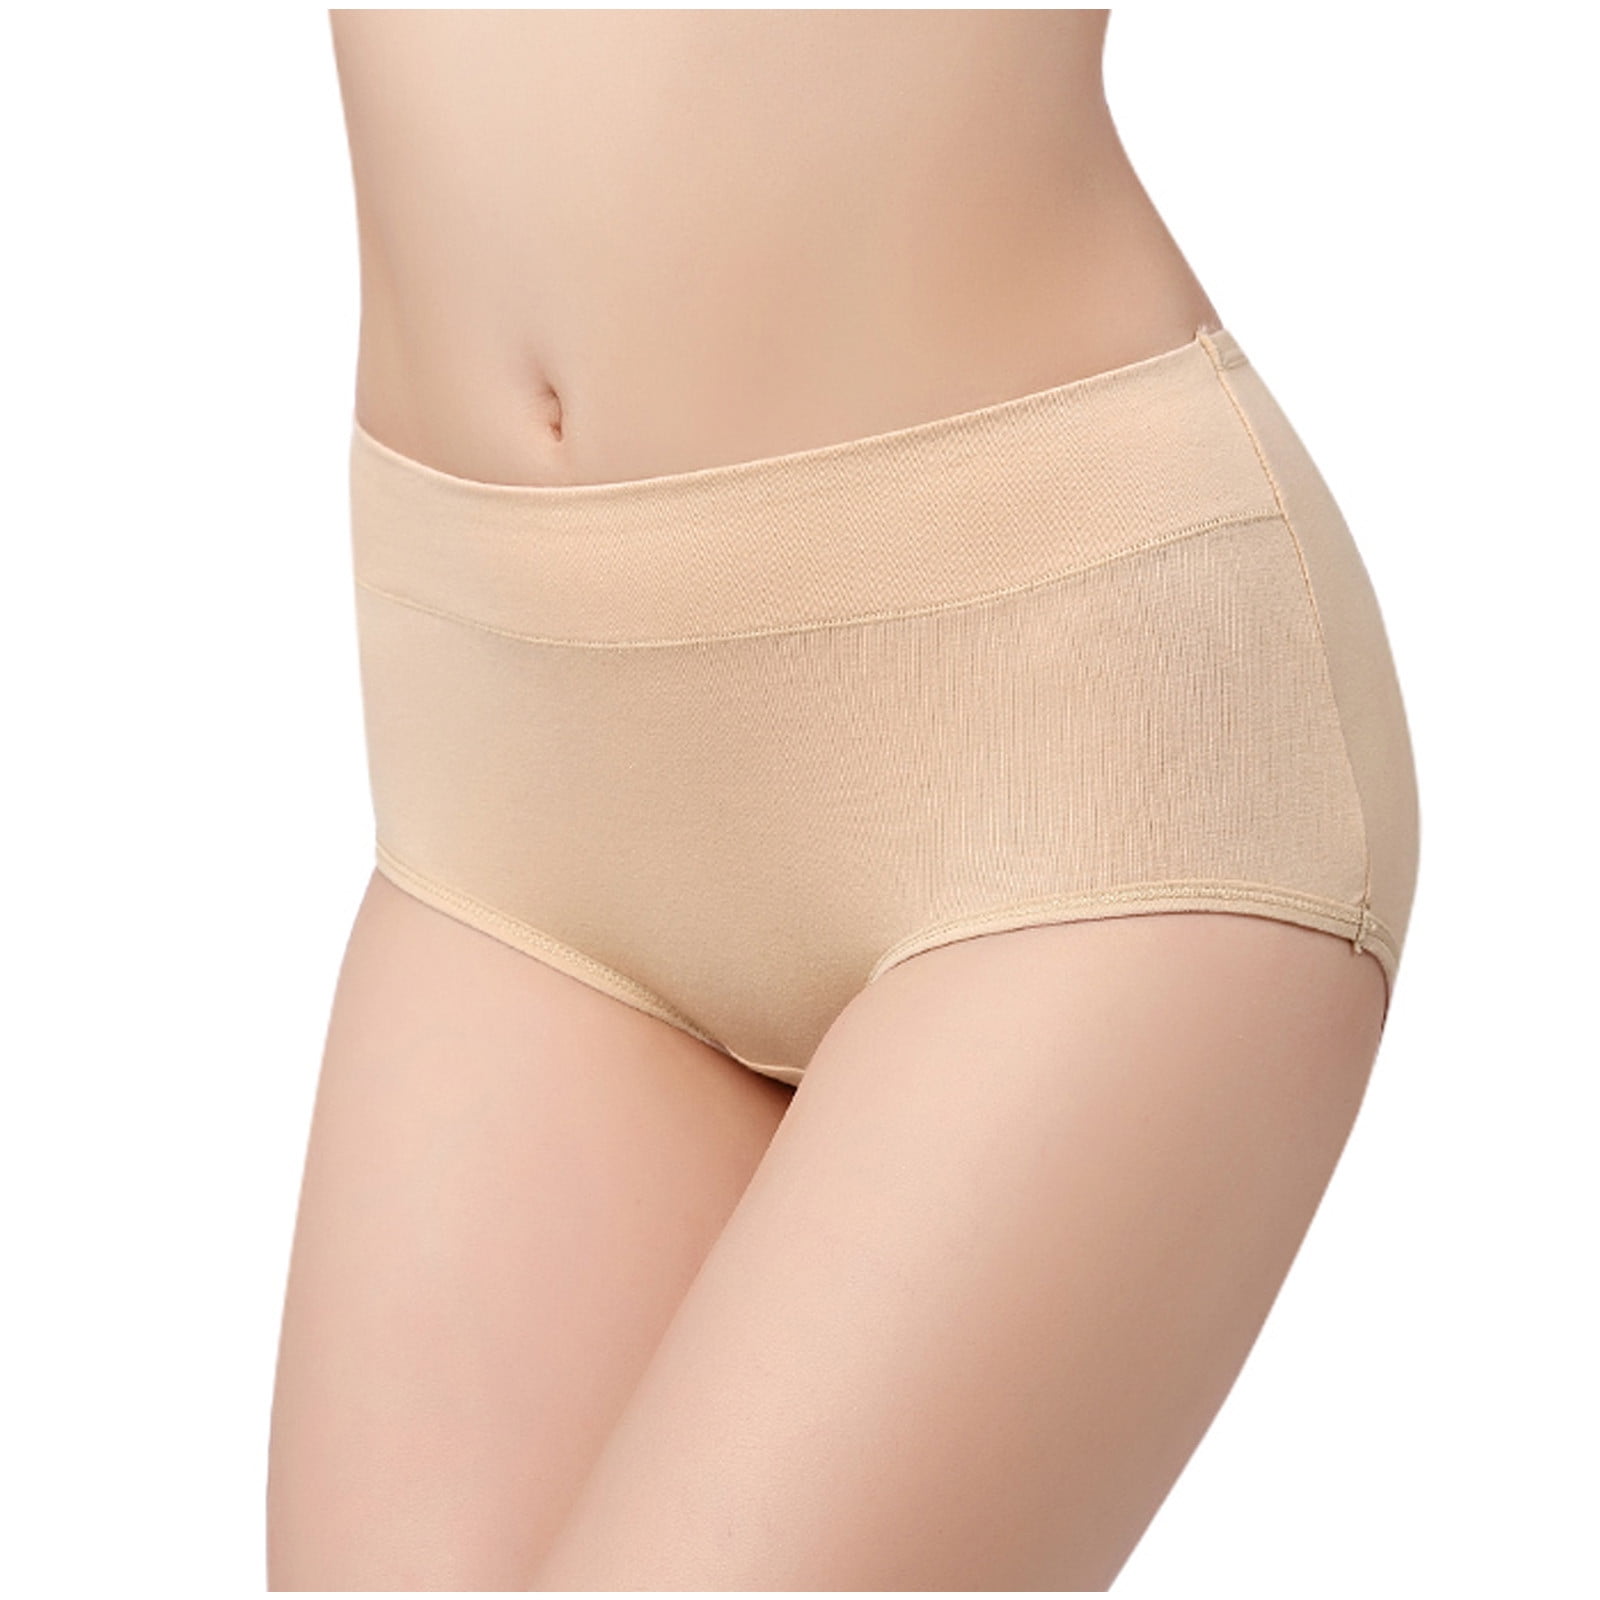 CYMMPU Comfort Breathable Lingerie Sexy Cotton Panties Mid Waist Hipster  Strechy Briefs for Women Ladies Seamless Underwear 